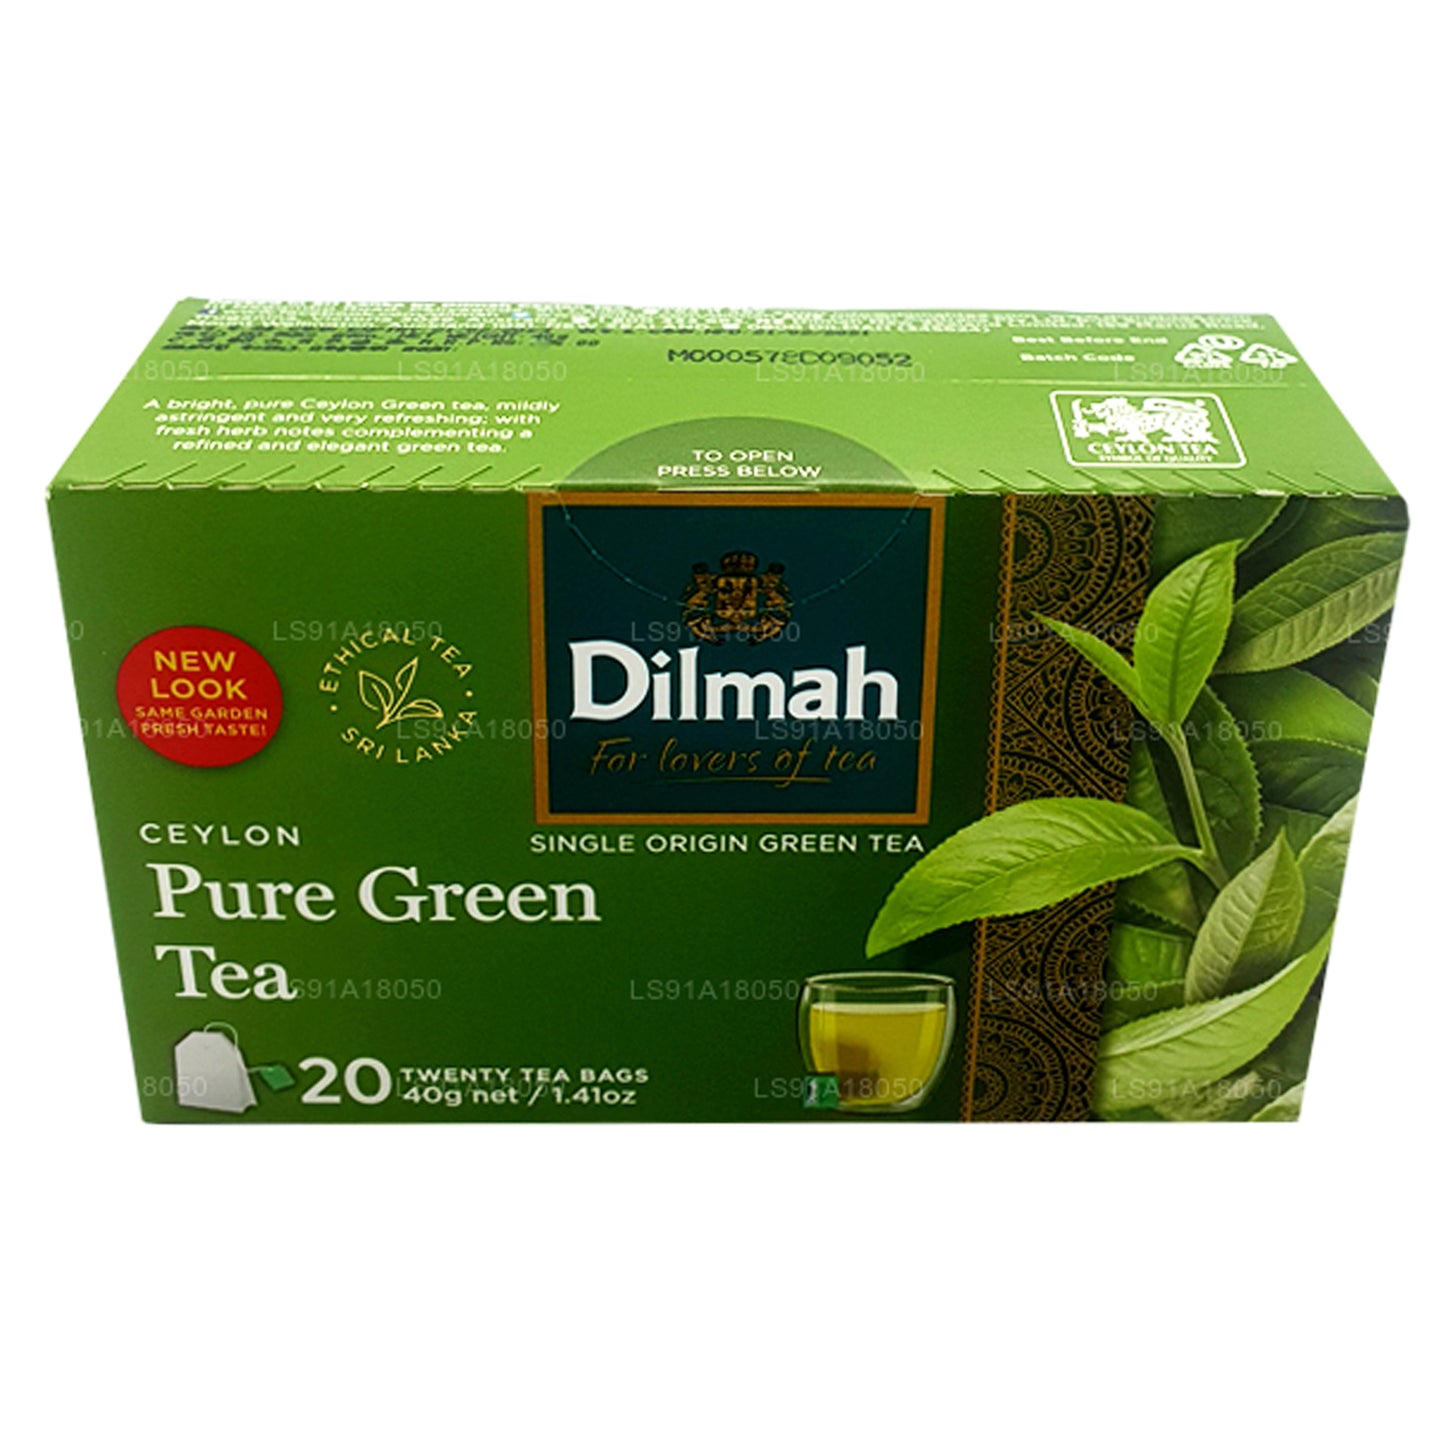 Dilmah 纯锡兰绿茶 (40g) 20 个茶包